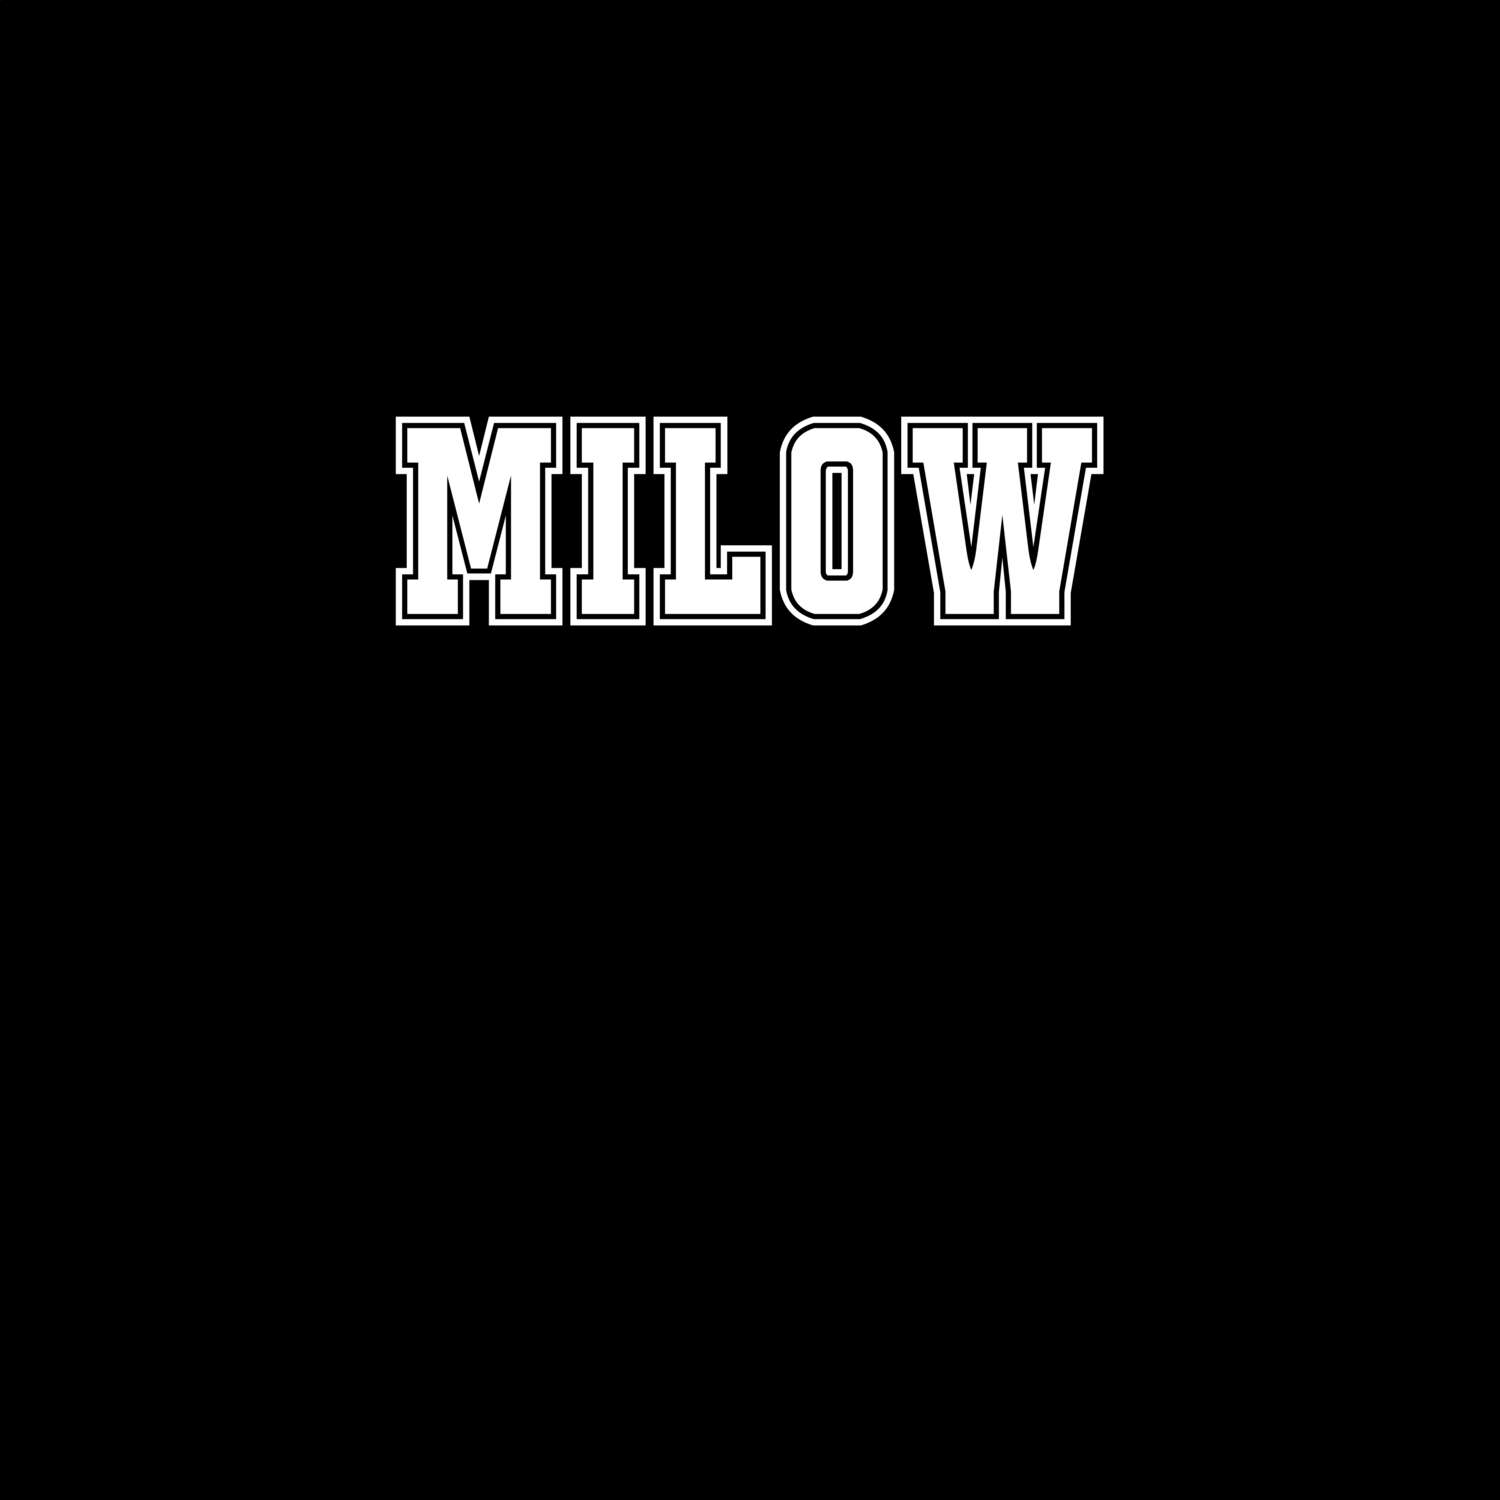 Milow T-Shirt »Classic«